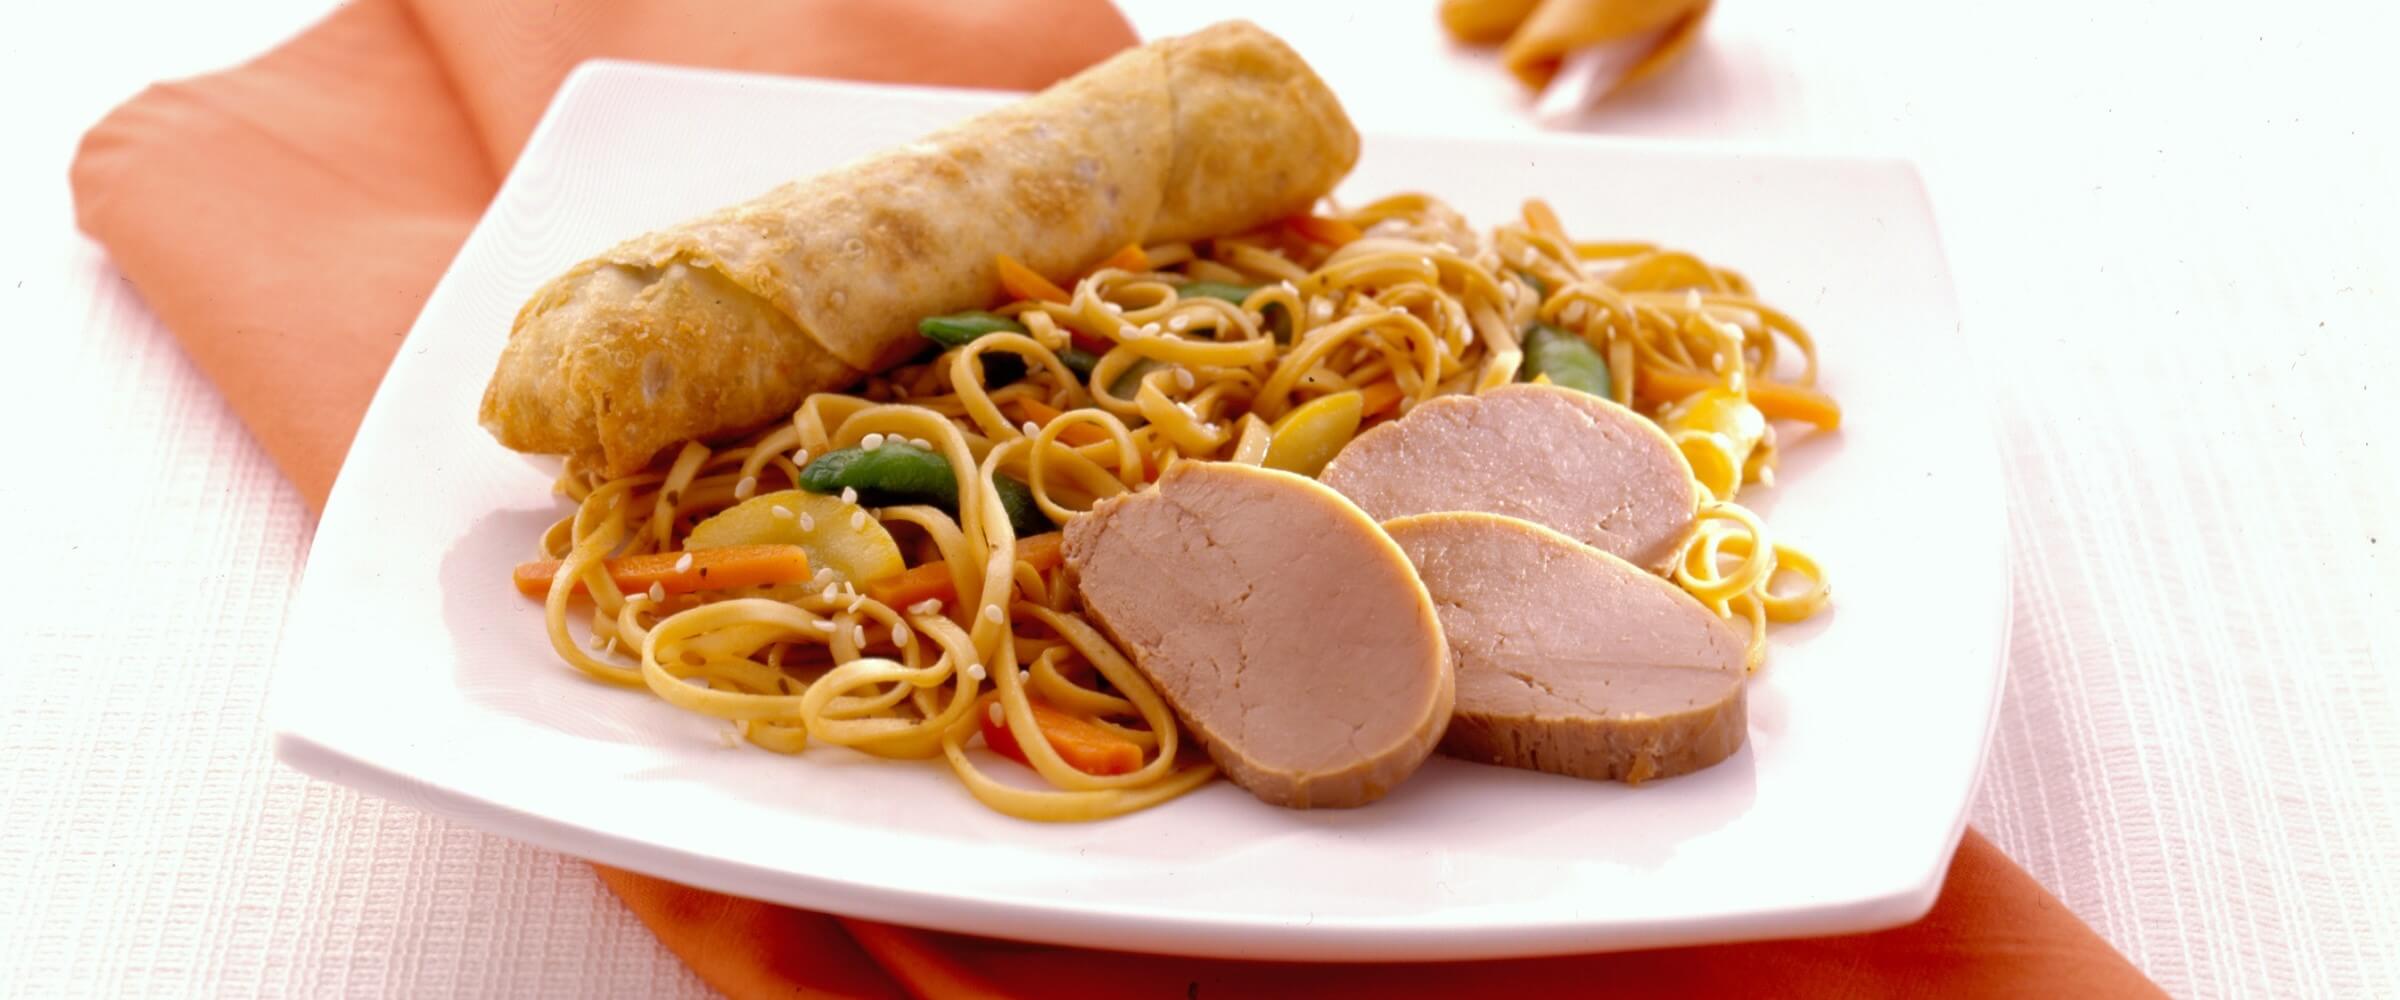 easy pork lo mein over noodles on white plate with orange napkin